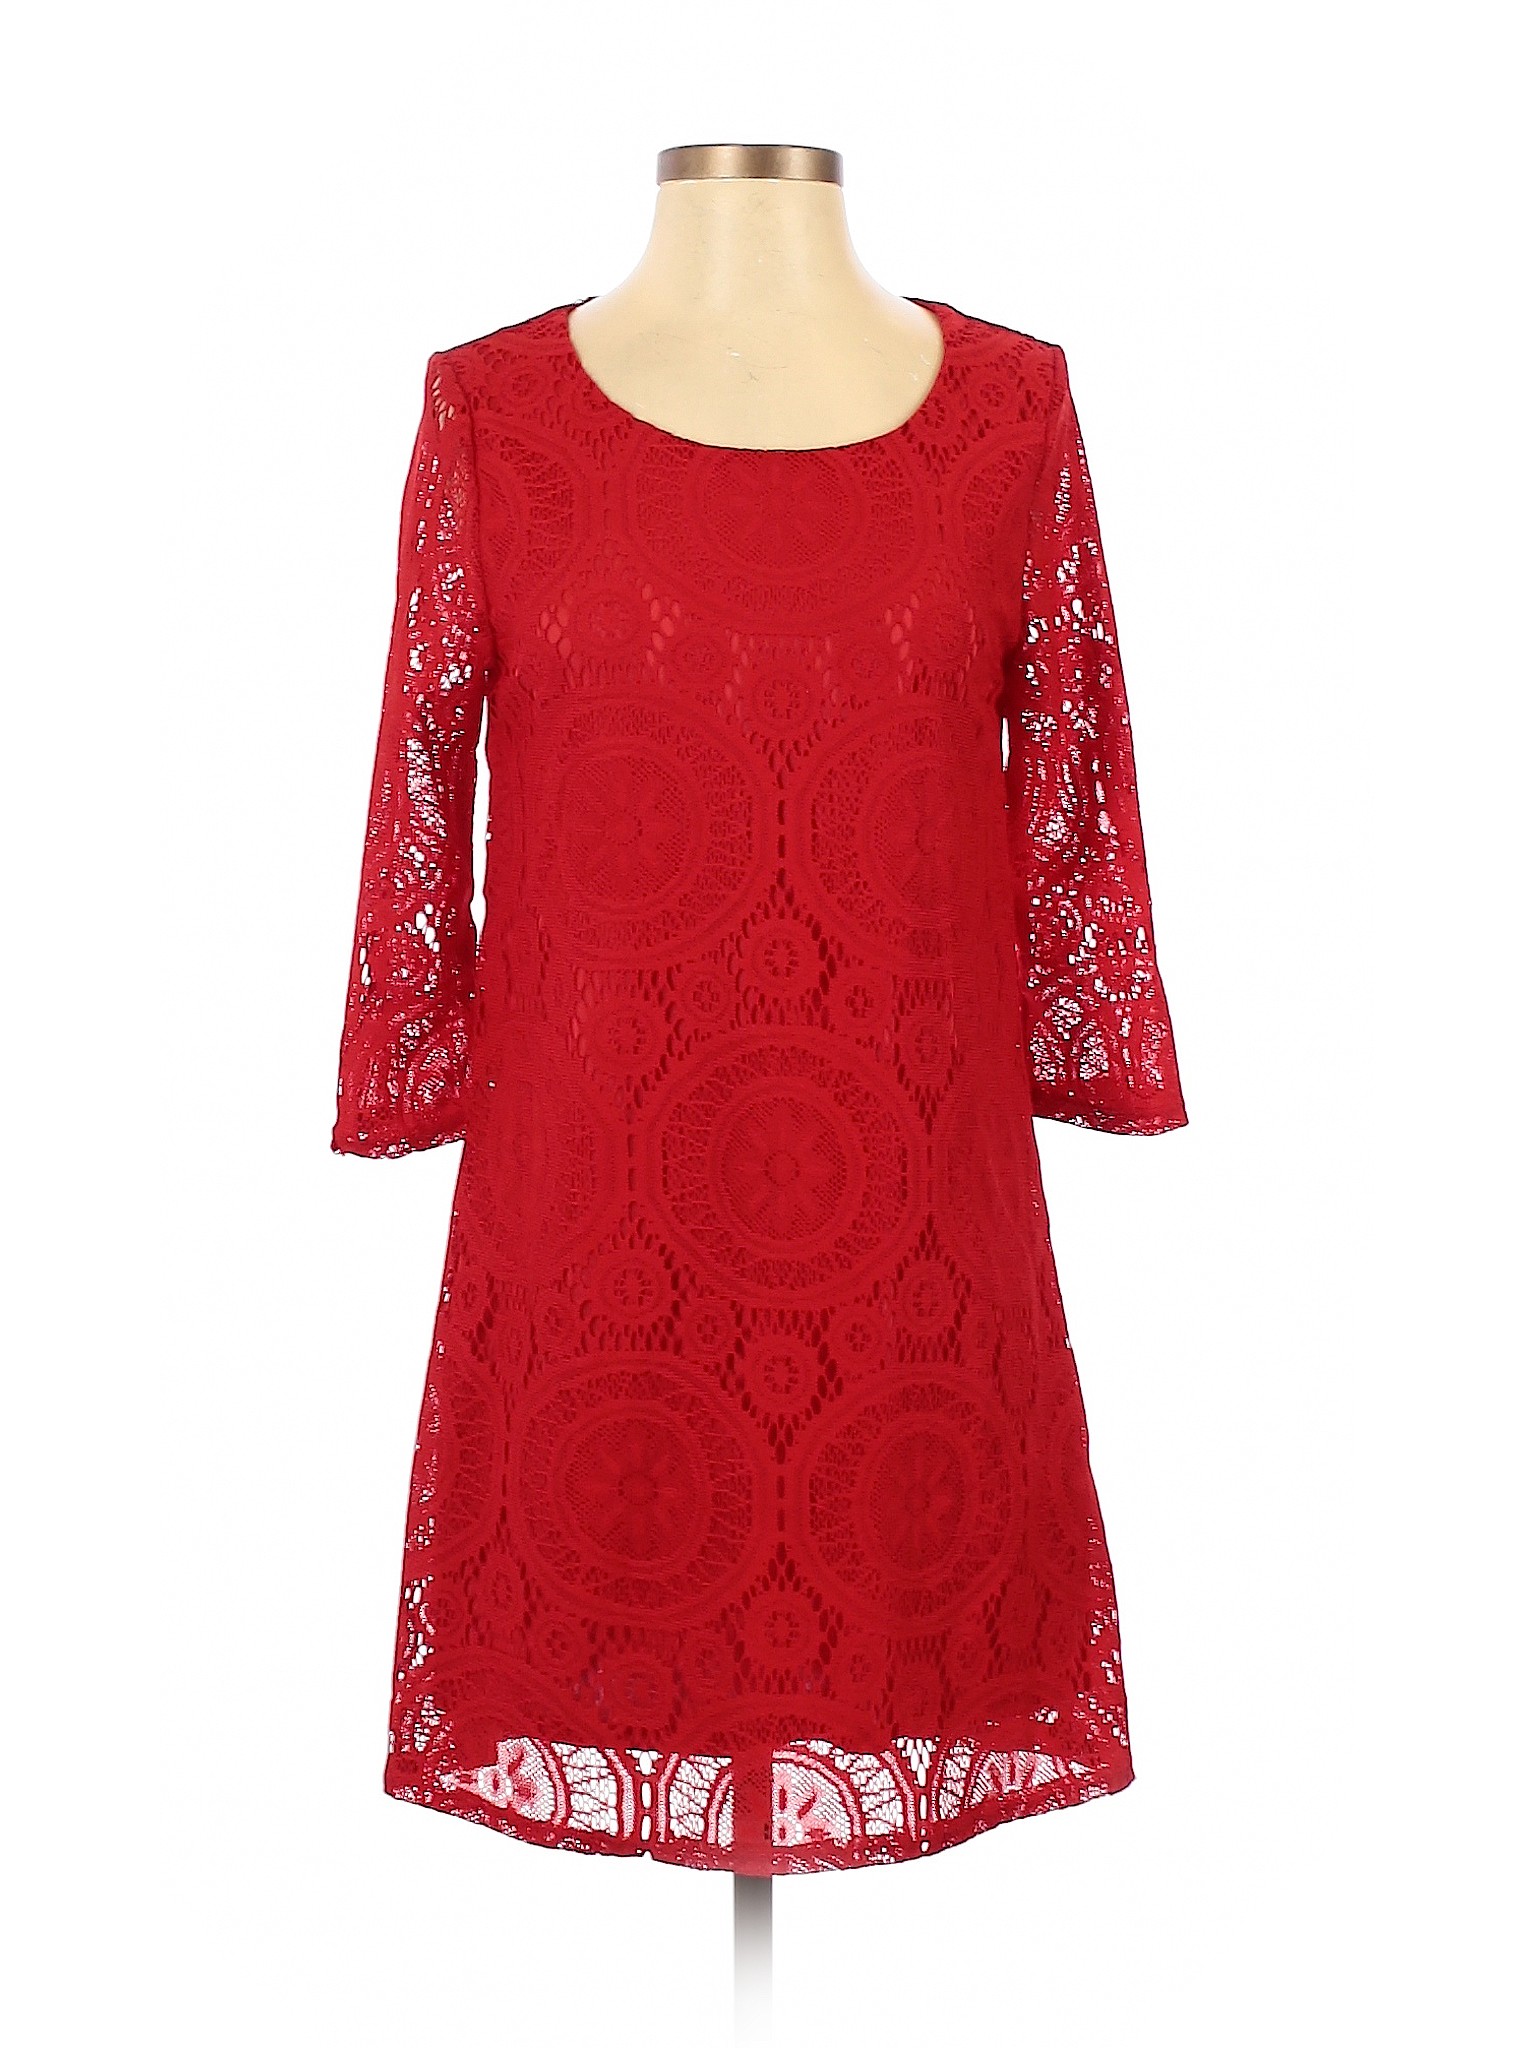 Noble U Women Red Casual Dress M | eBay